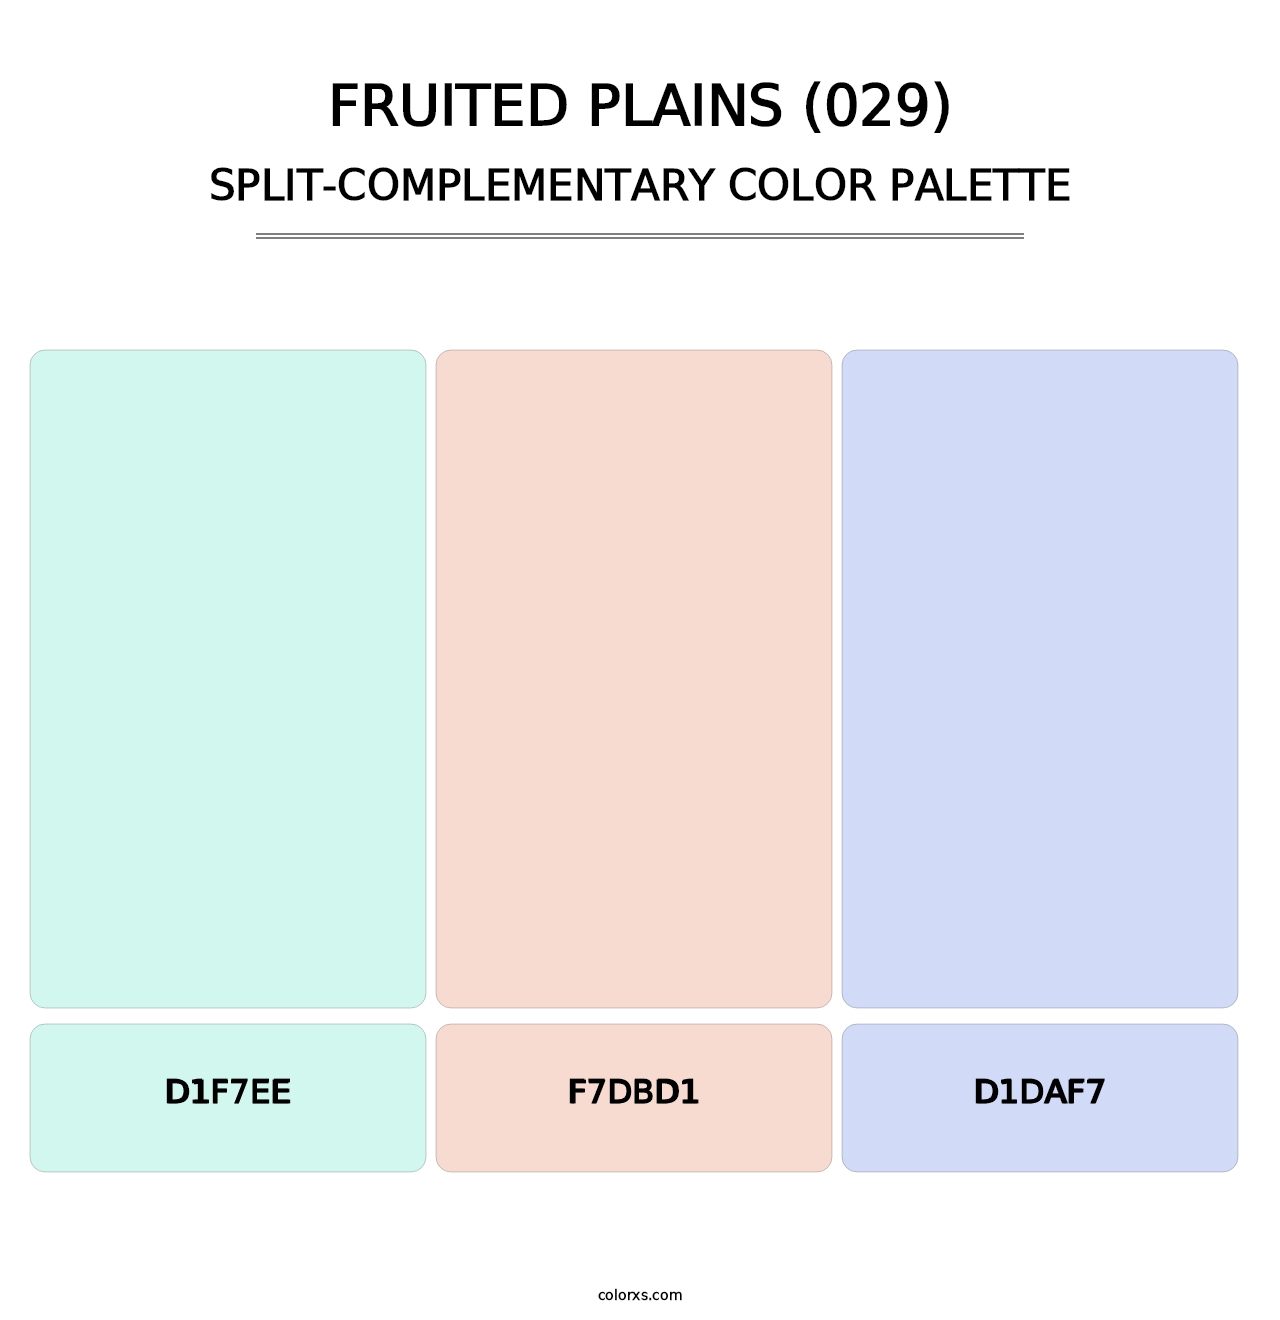 Fruited Plains (029) - Split-Complementary Color Palette